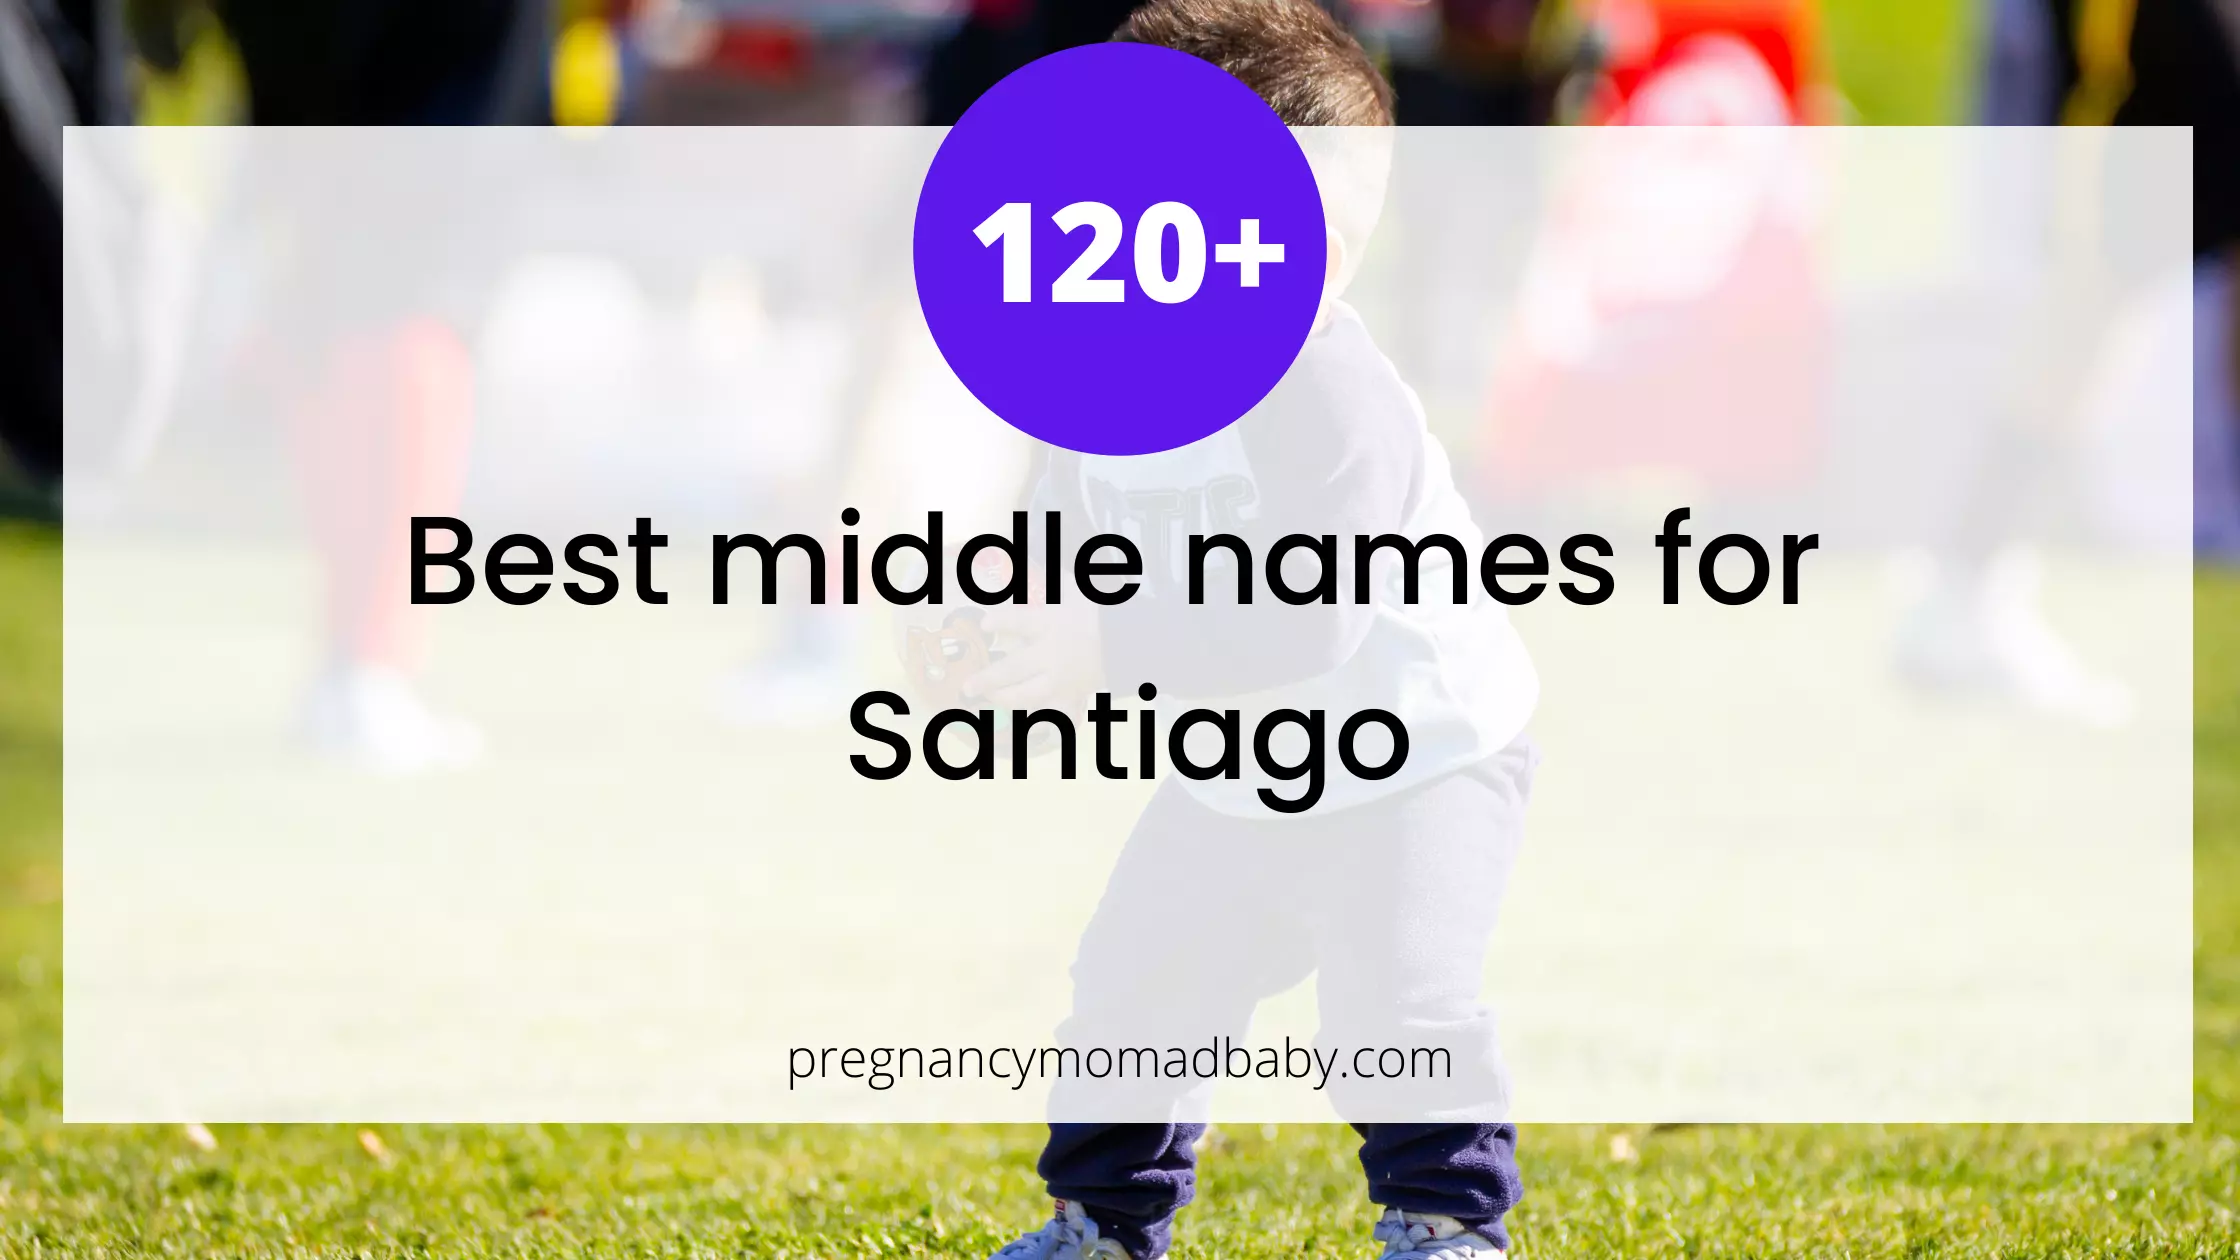 middle names for Santiago